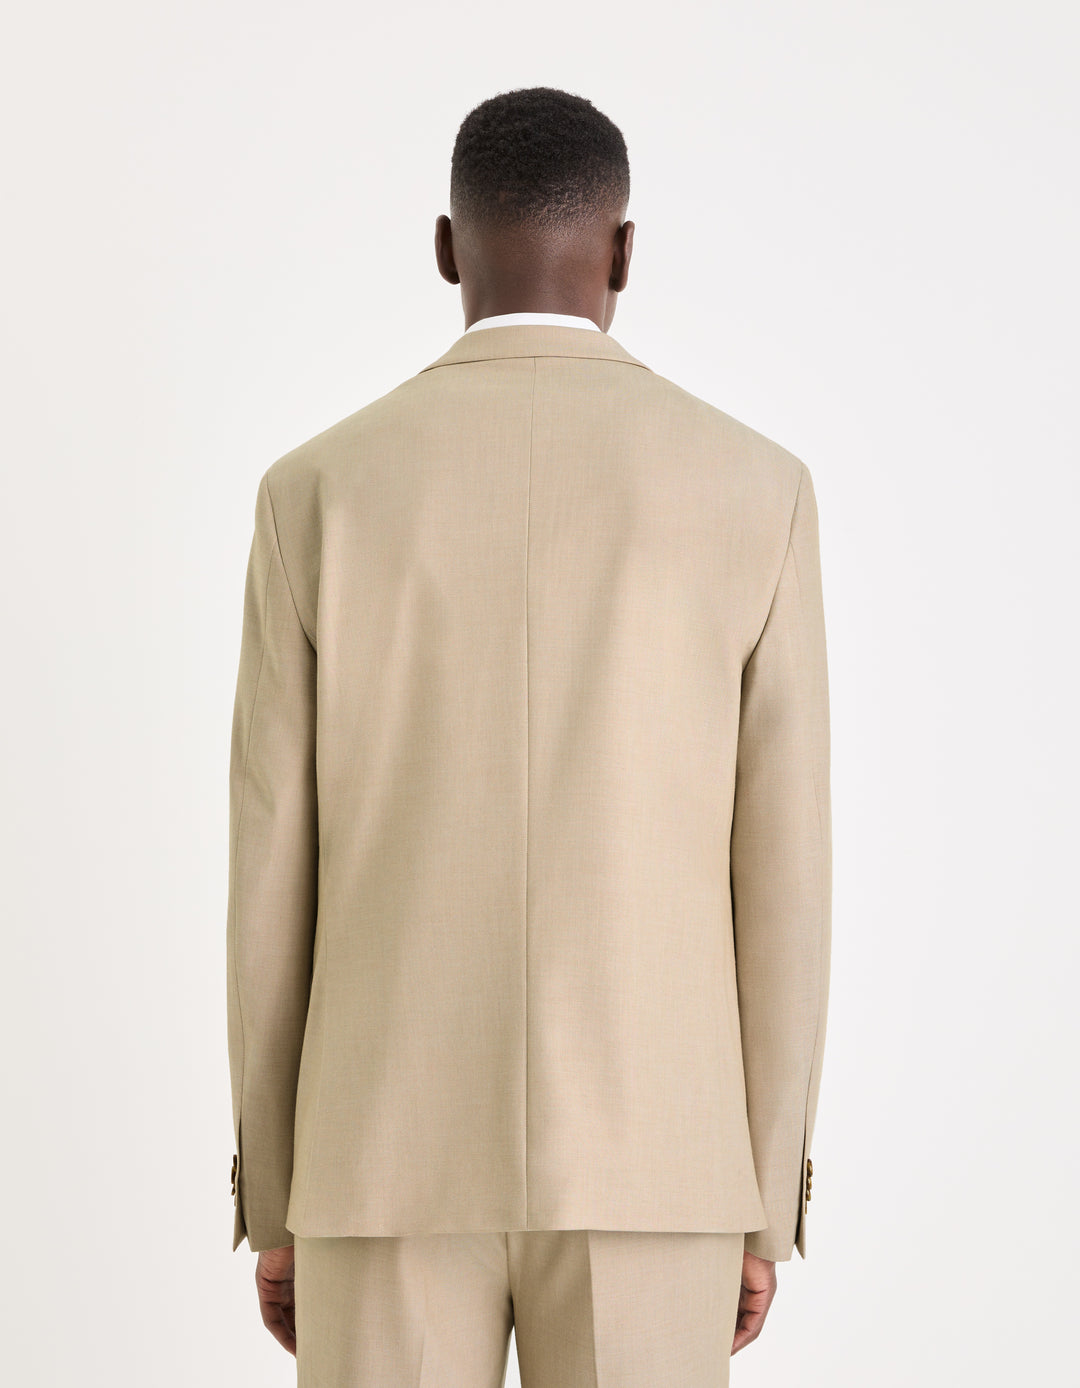 Slim suit jacket